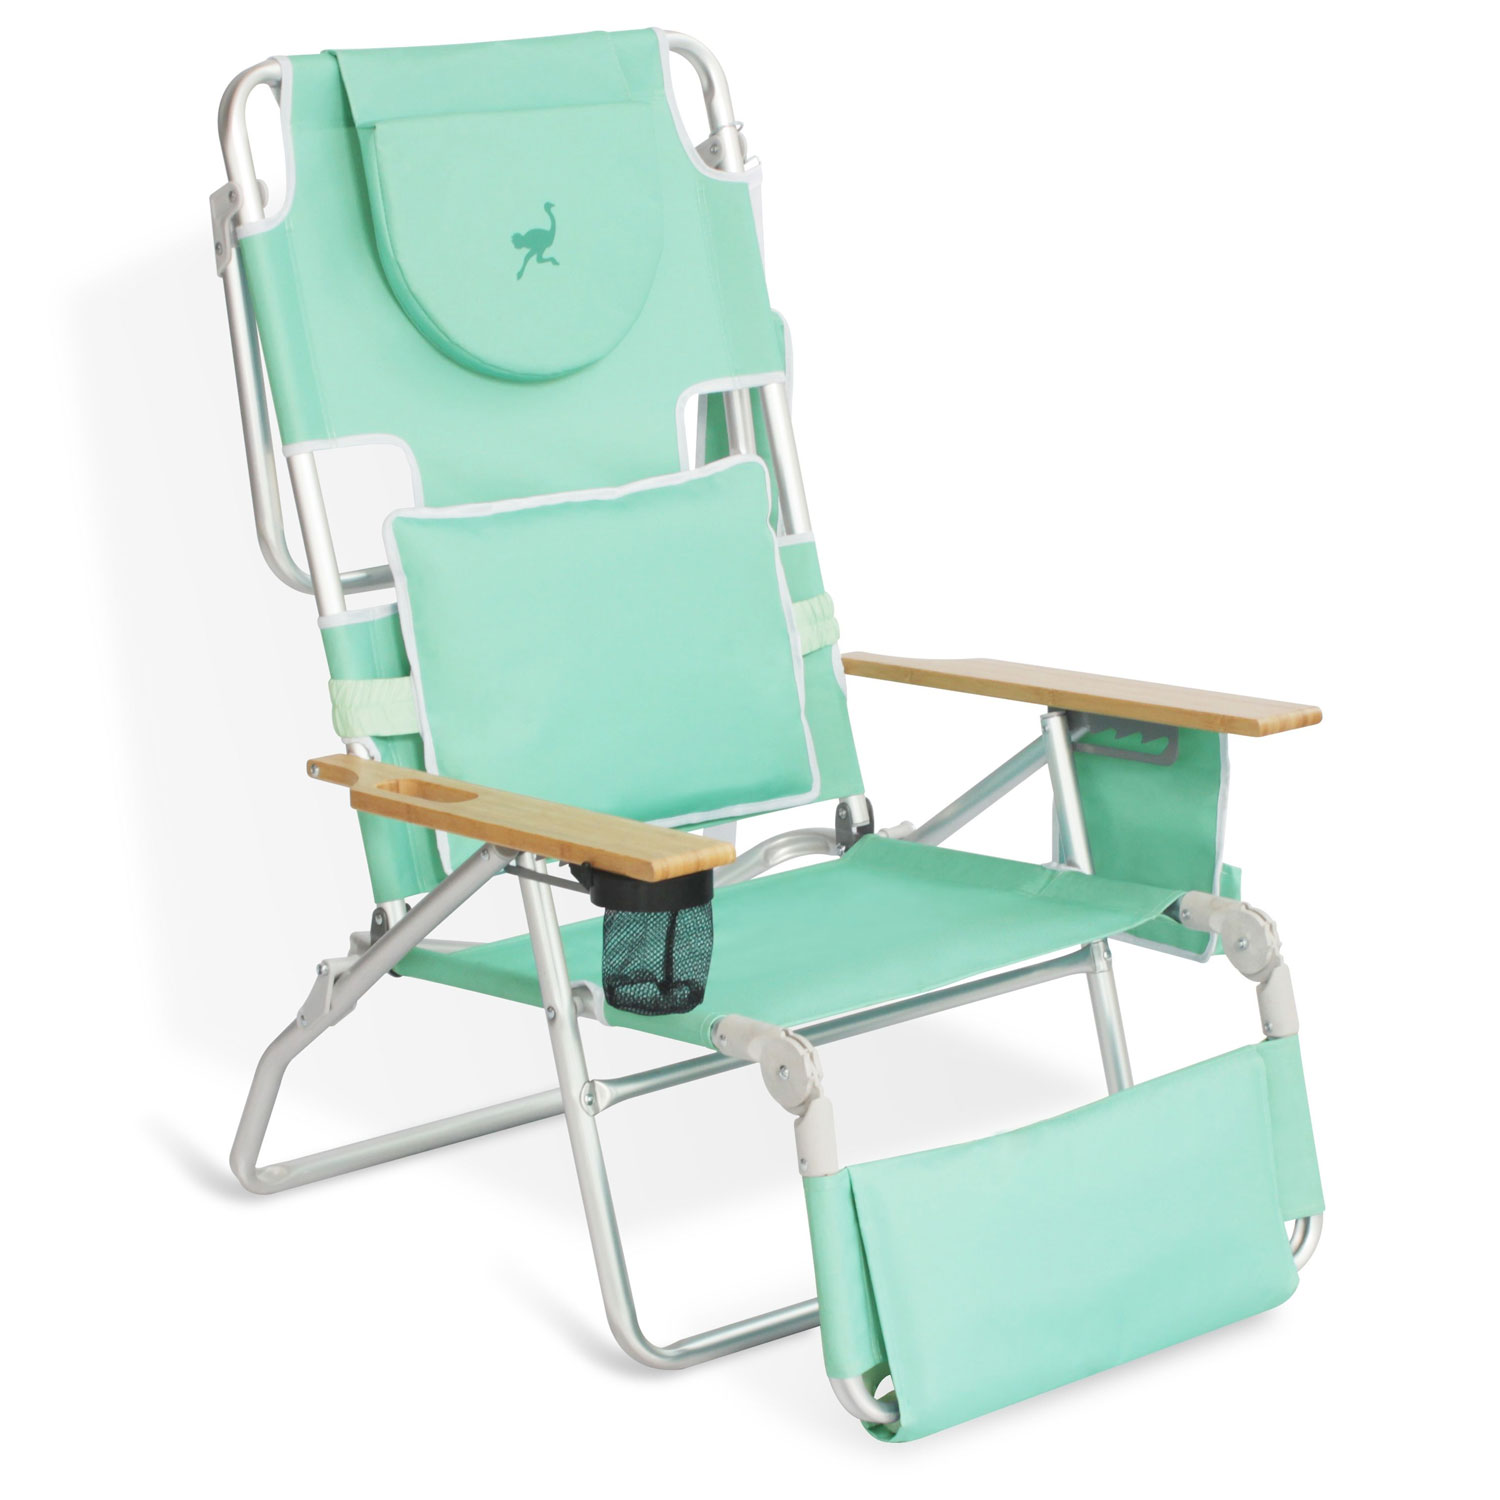 Simple Beach Chair Fold Up with Simple Decor